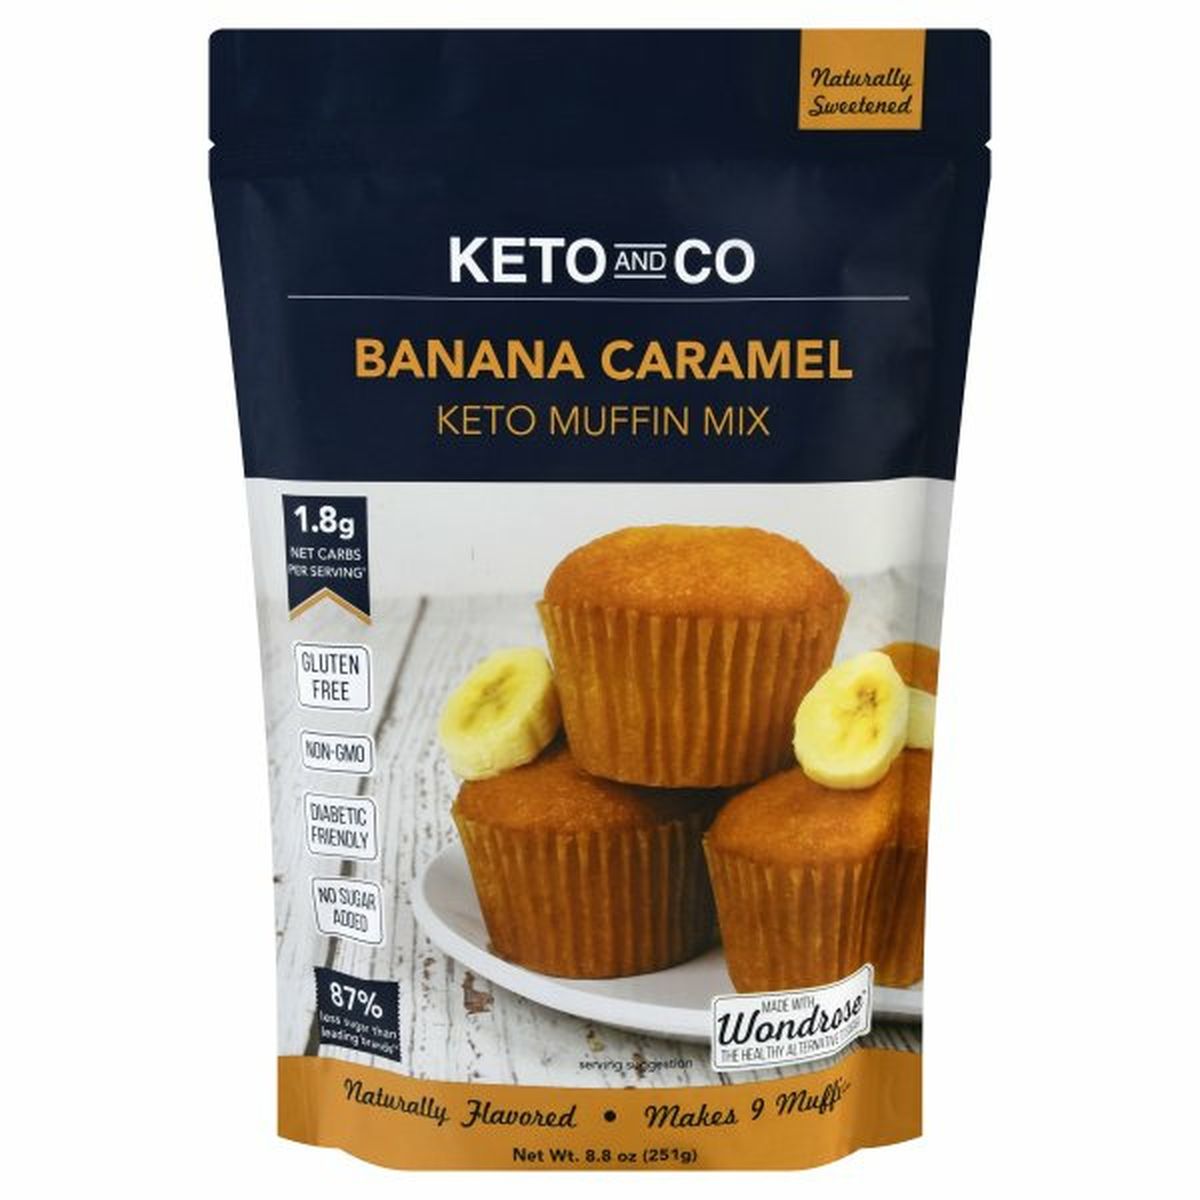 Calories in Keto And Co Keto Muffin Mix, Banana Caramel